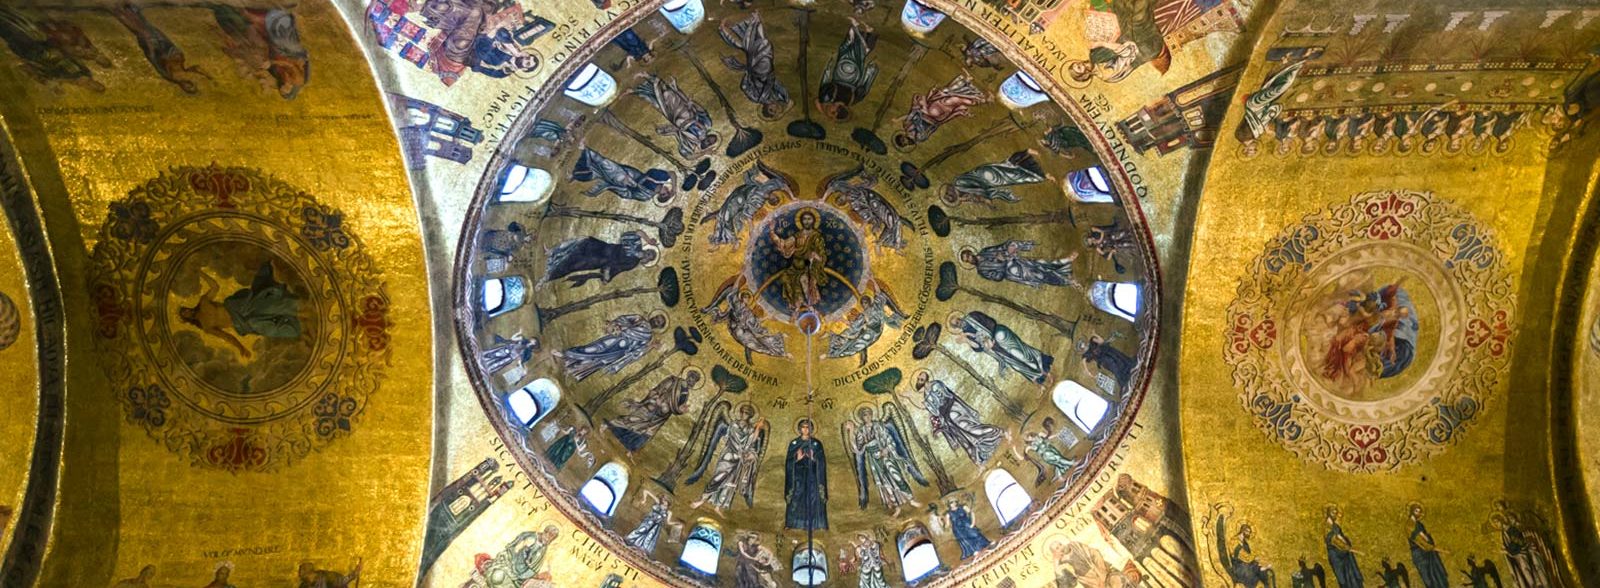 The best St. Mark’s Basilica mosaics: discovering a treasure